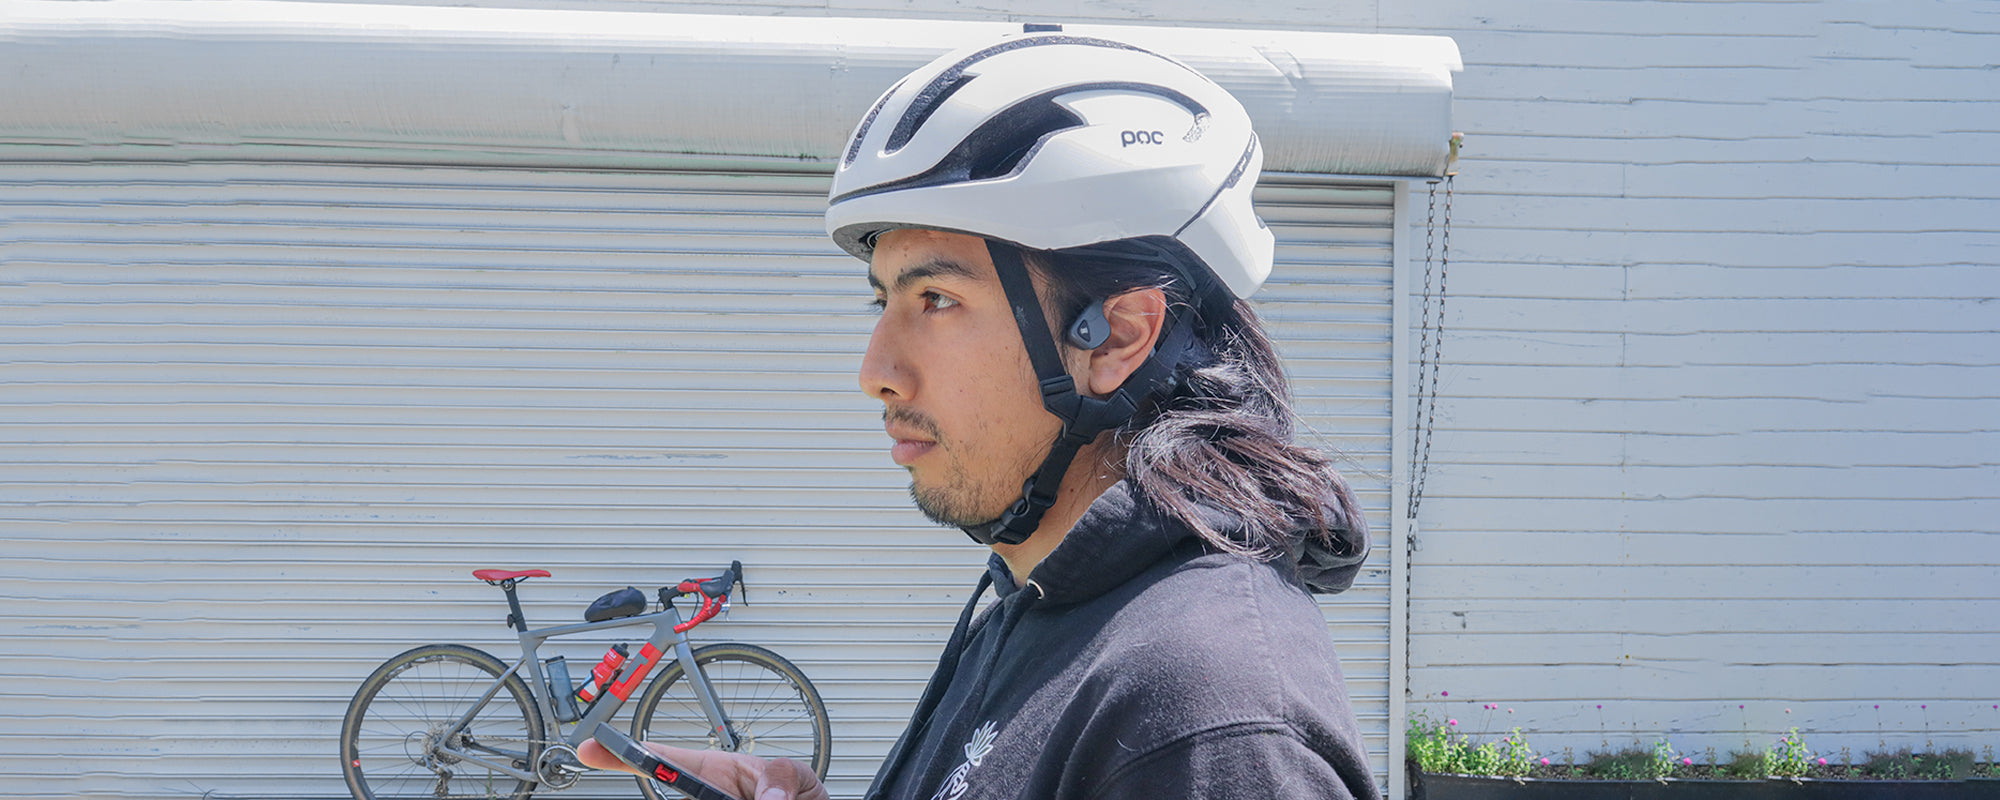 Man wearing bike helmet and AfterShokz Air wireless headphones